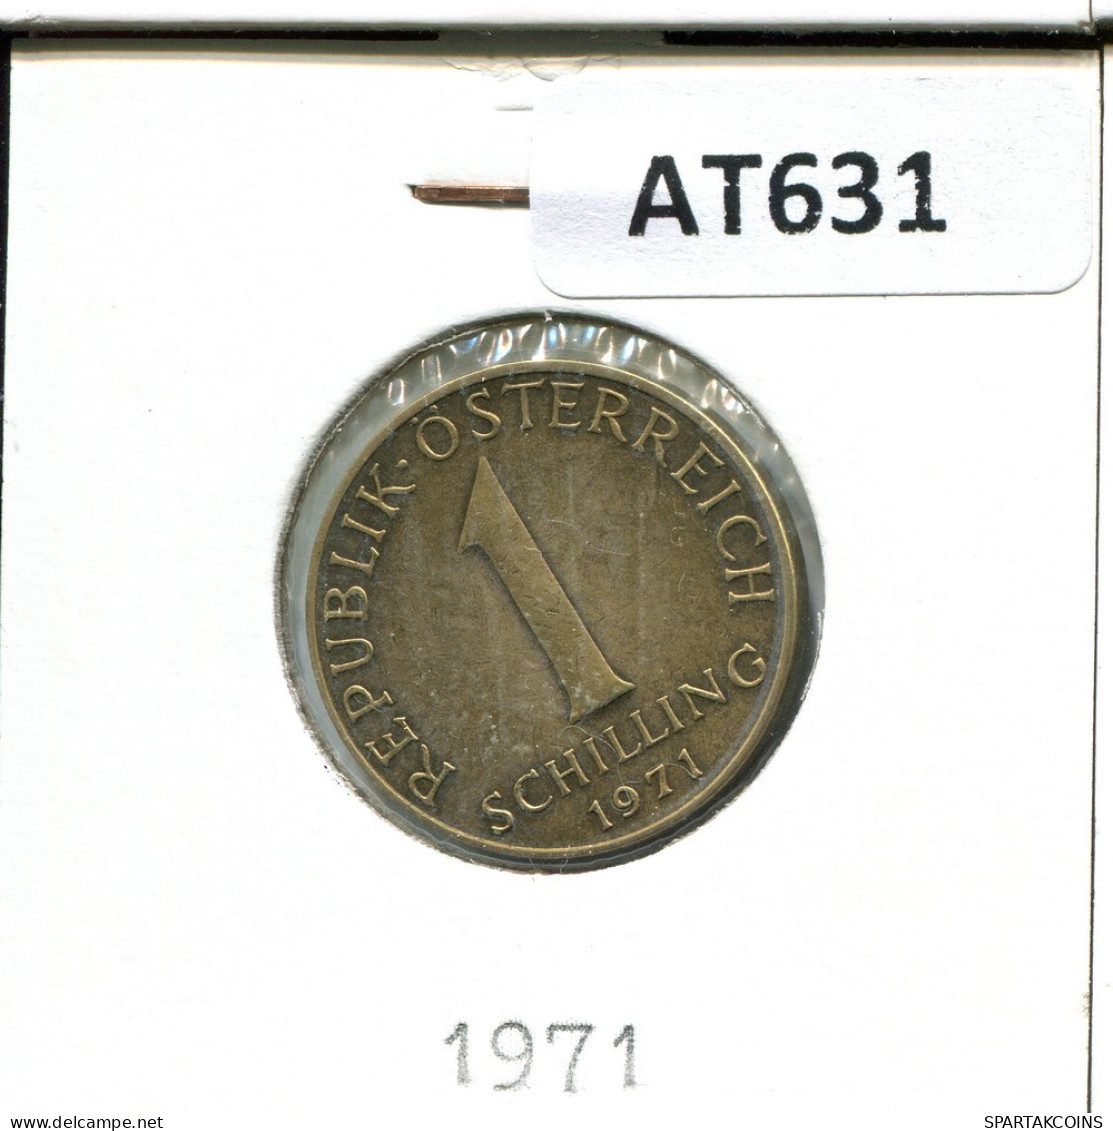 1 SCHILLING 1971 AUSTRIA Coin #AT631.U.A - Oesterreich